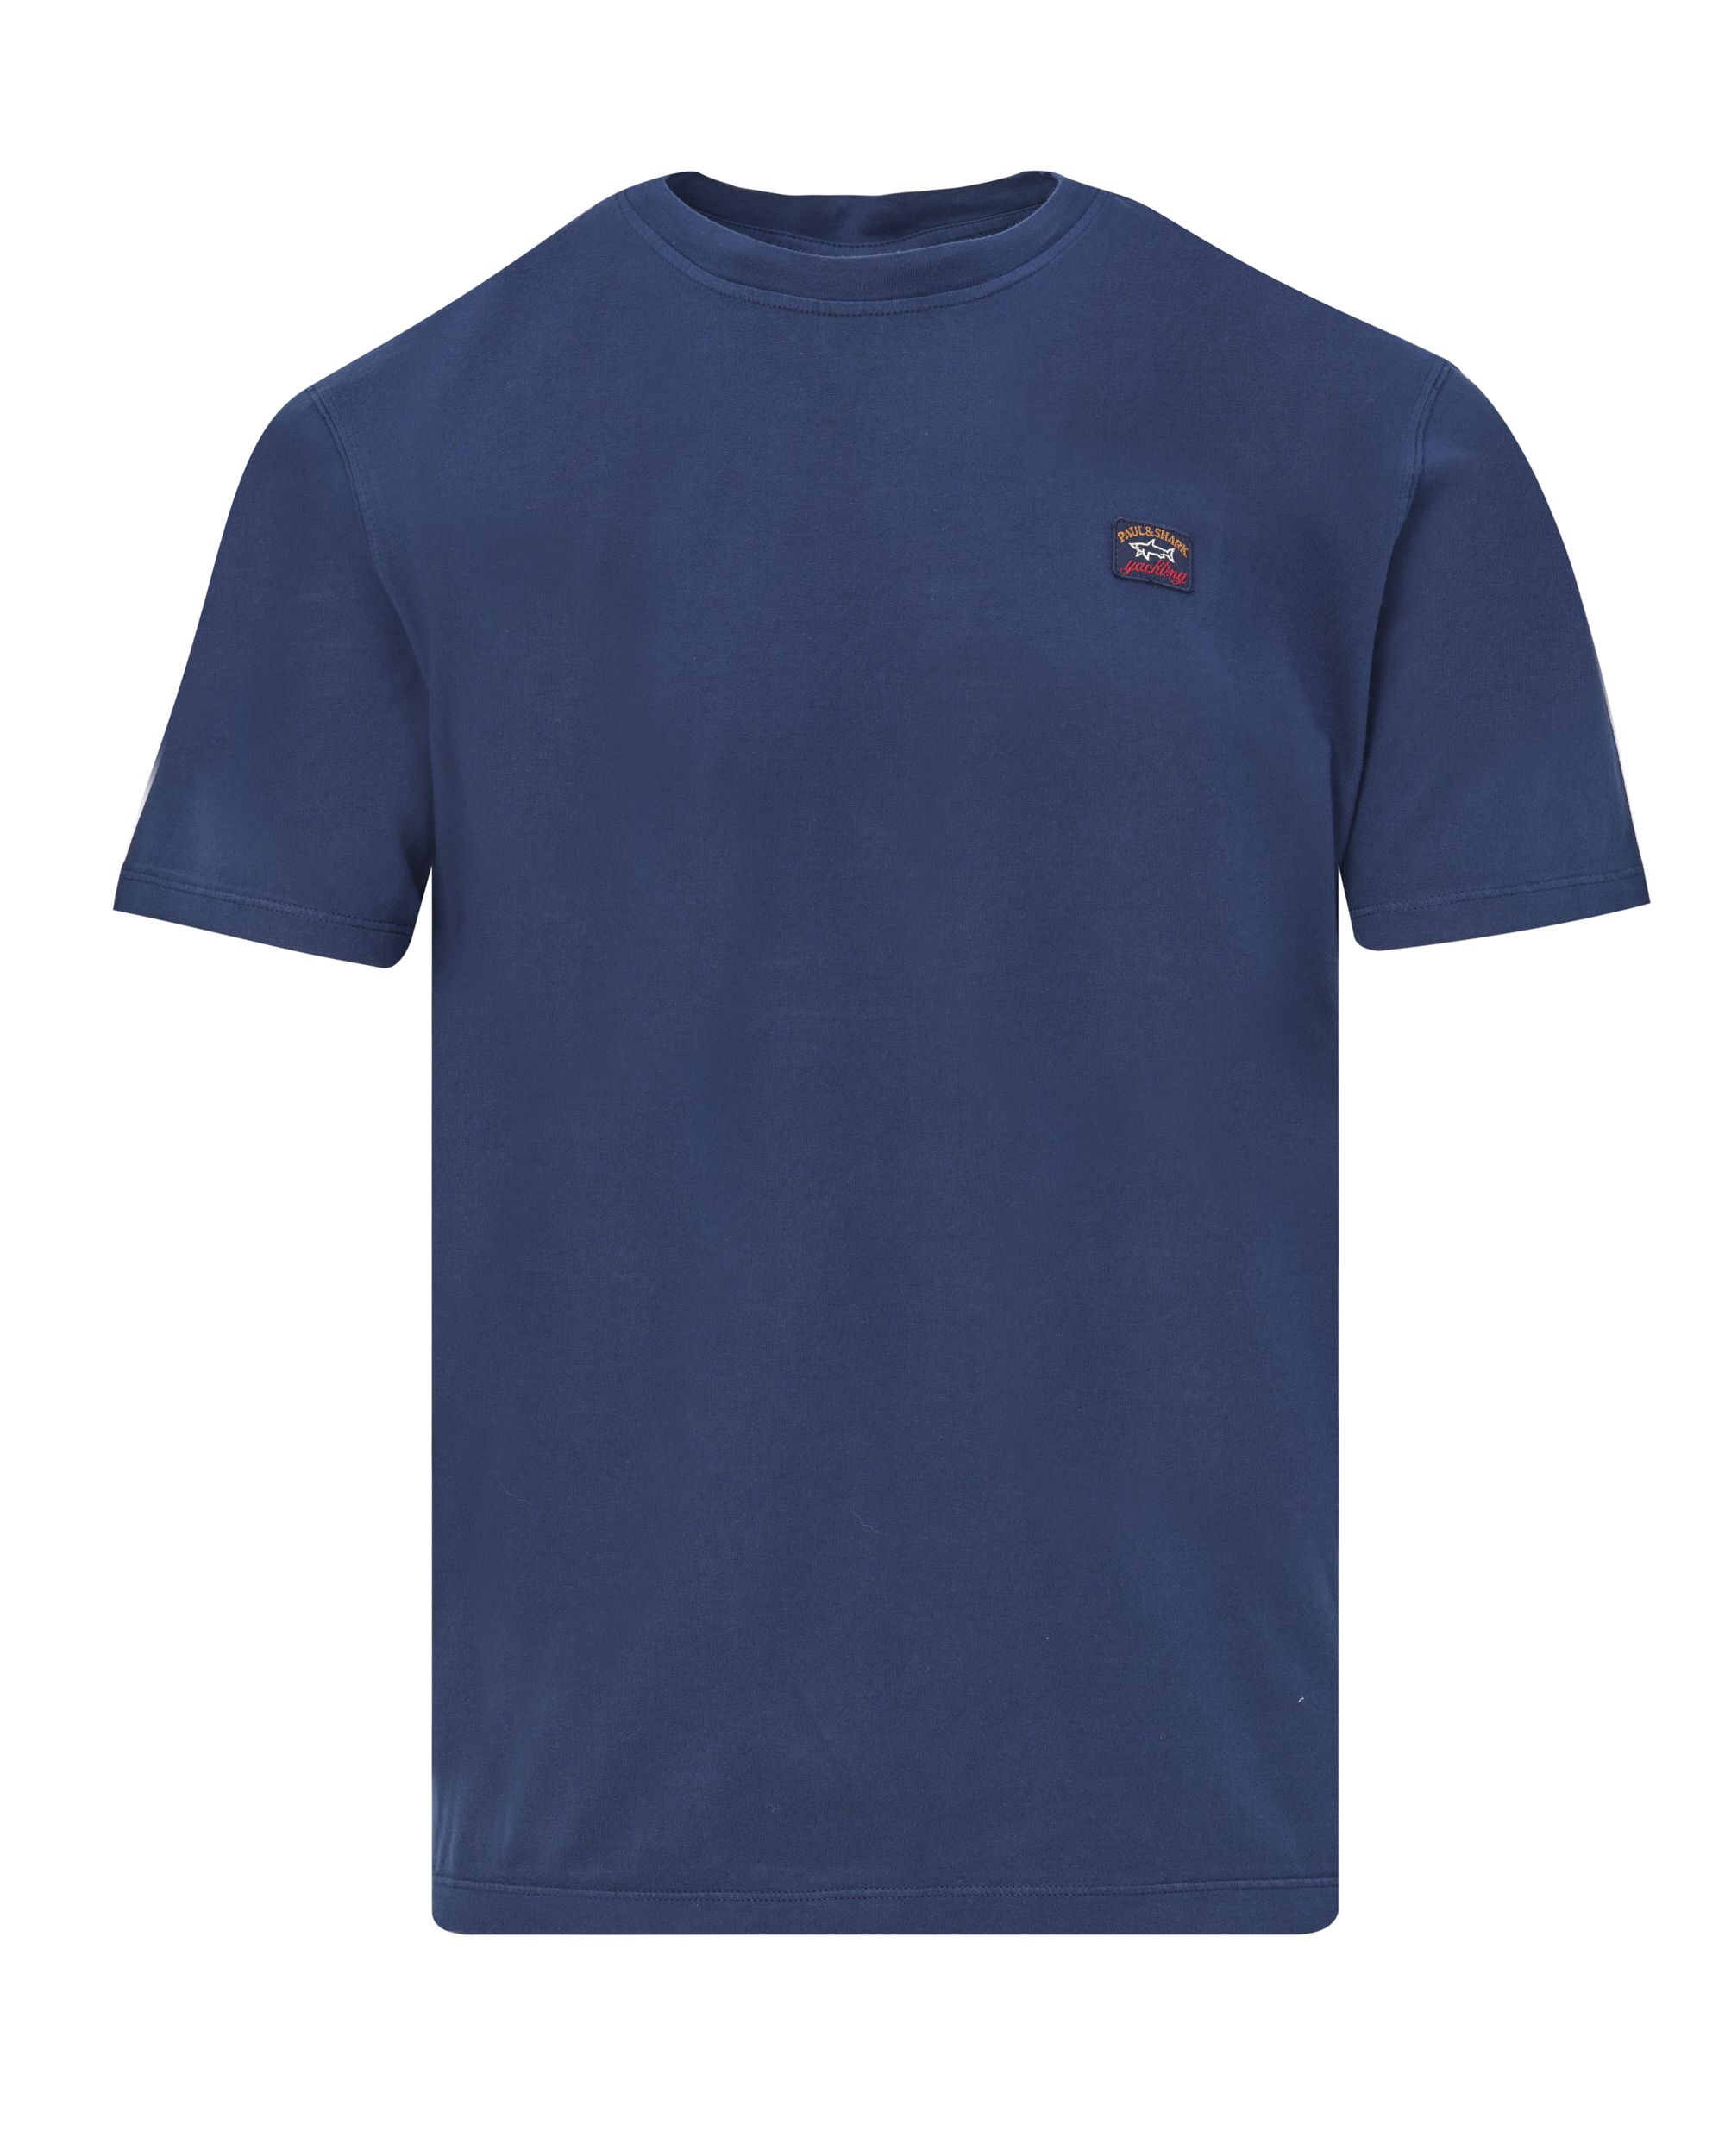 Paul & Shark T-shirt KM Donker blauw 083348-001-L